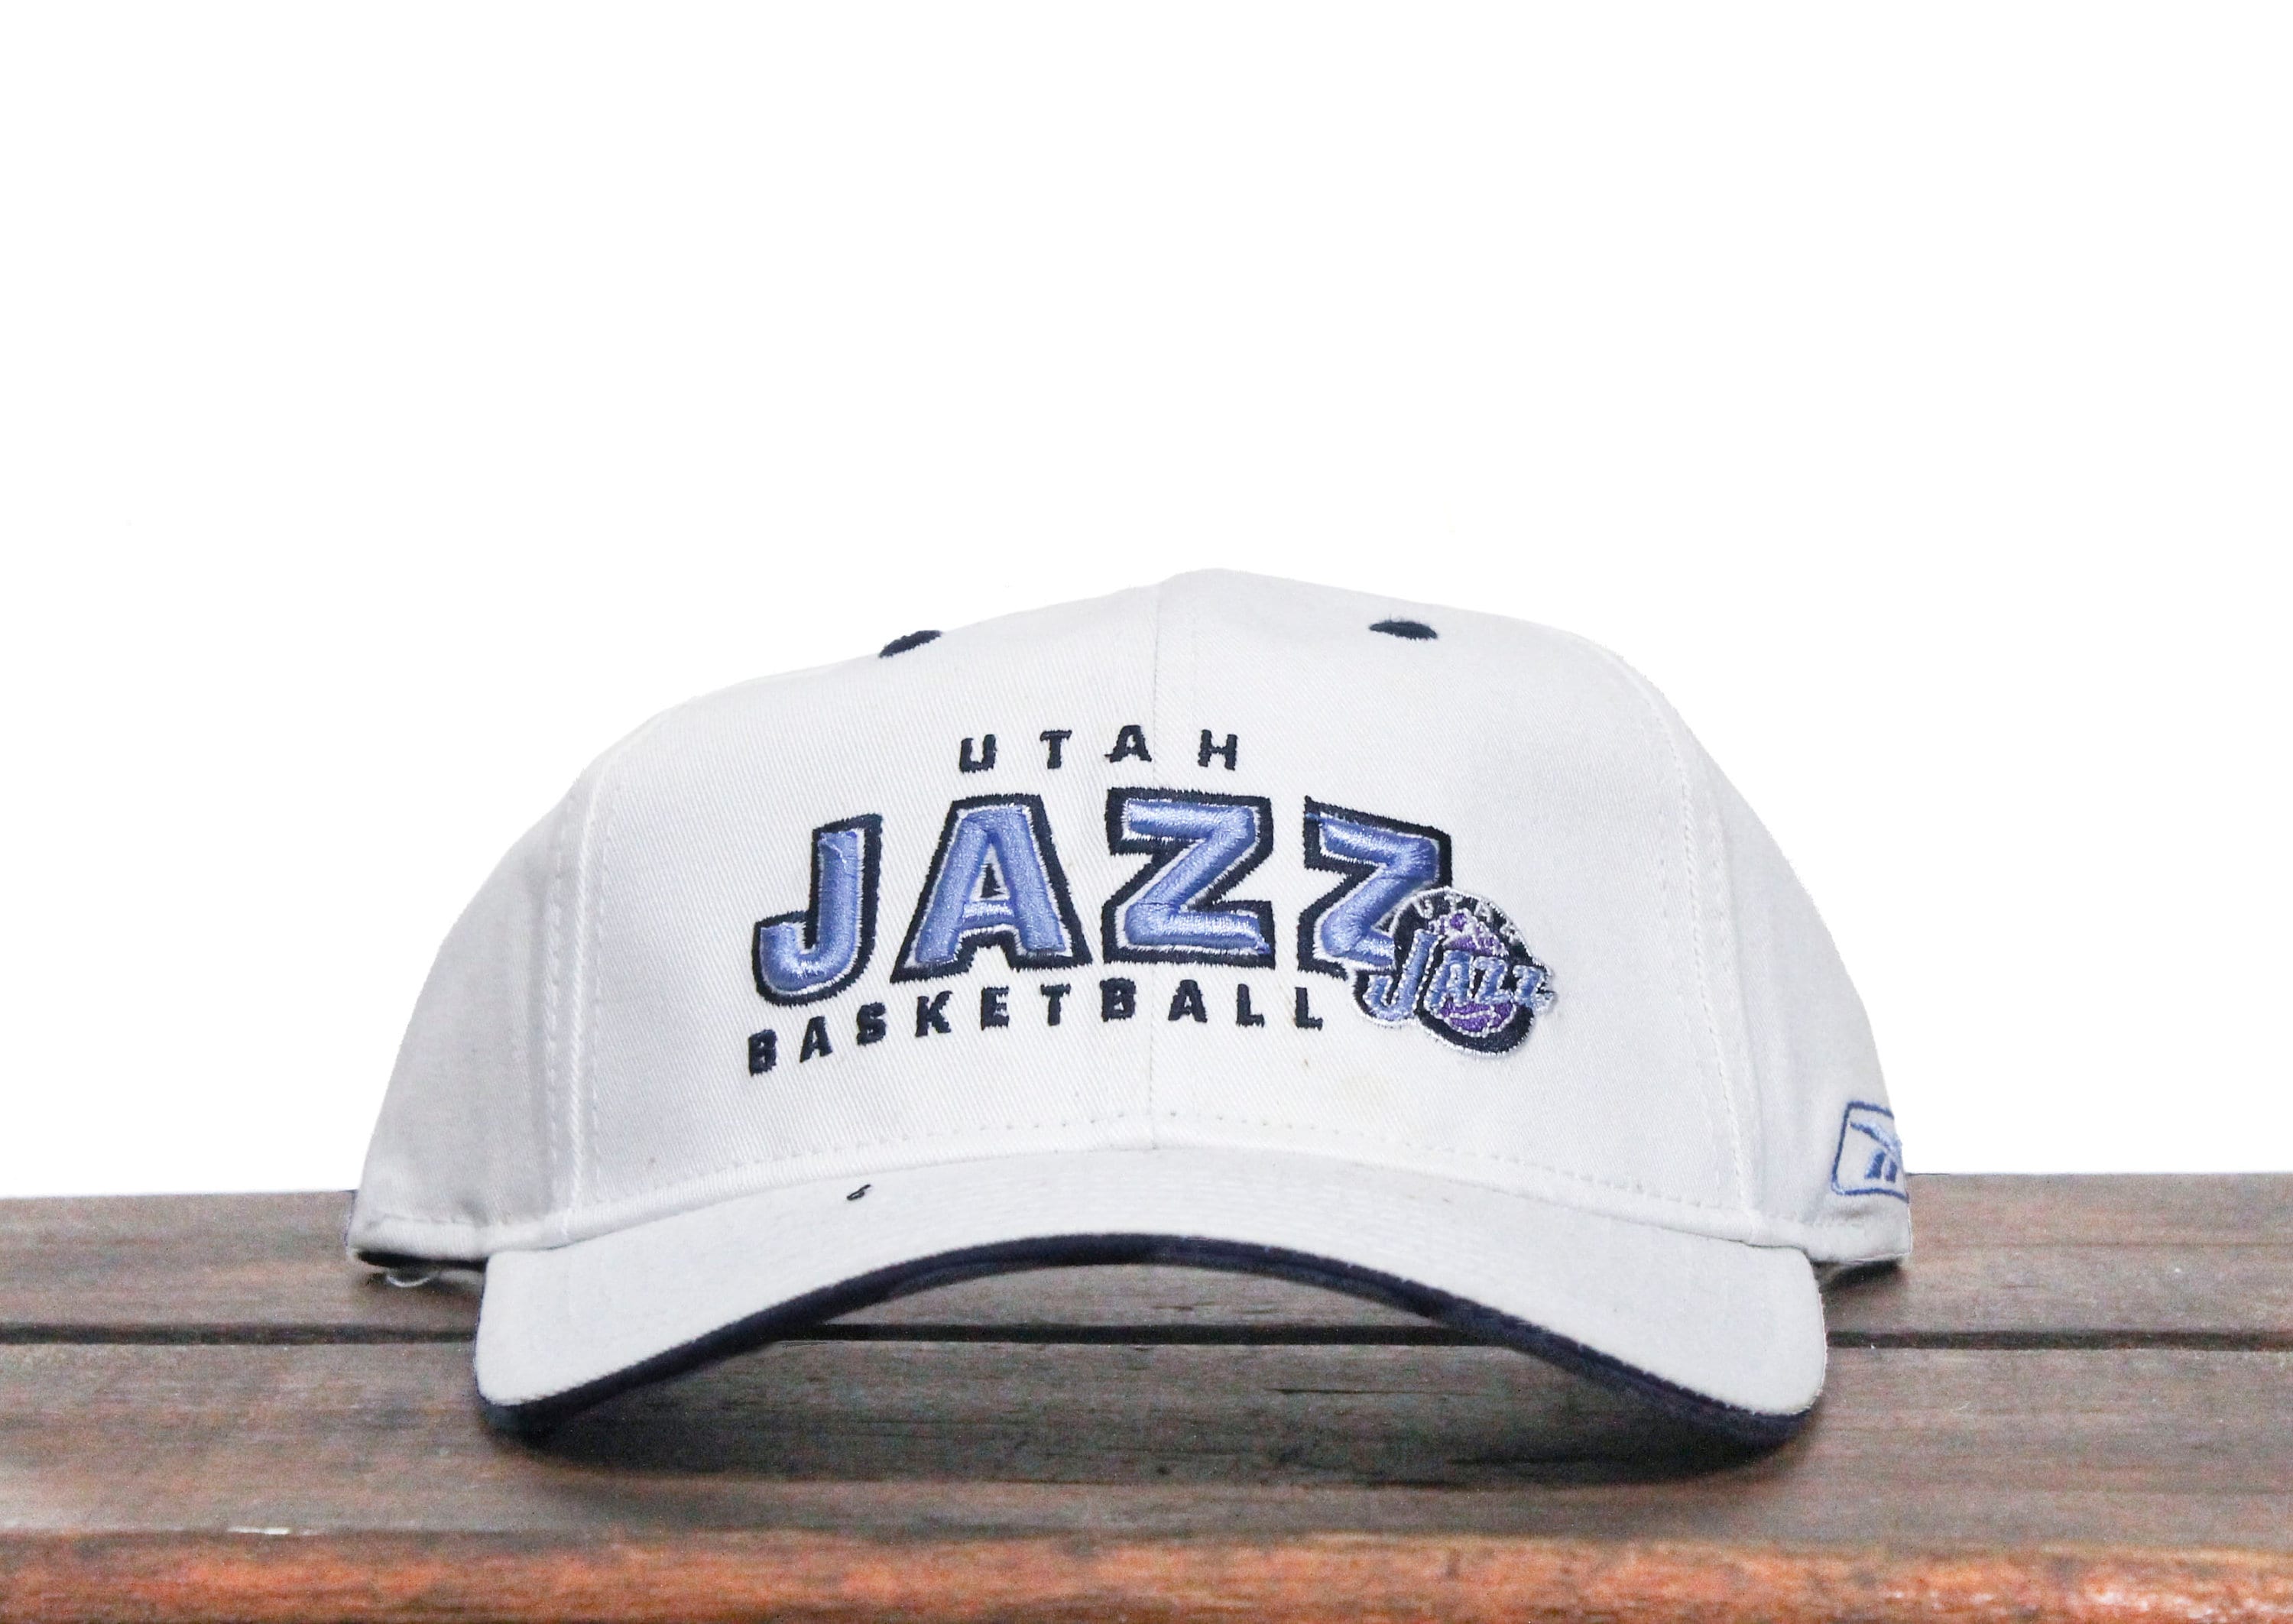 Vintage NOS New Era Cap NBA Utah Jazz Hat Fitted Hat 7.5 